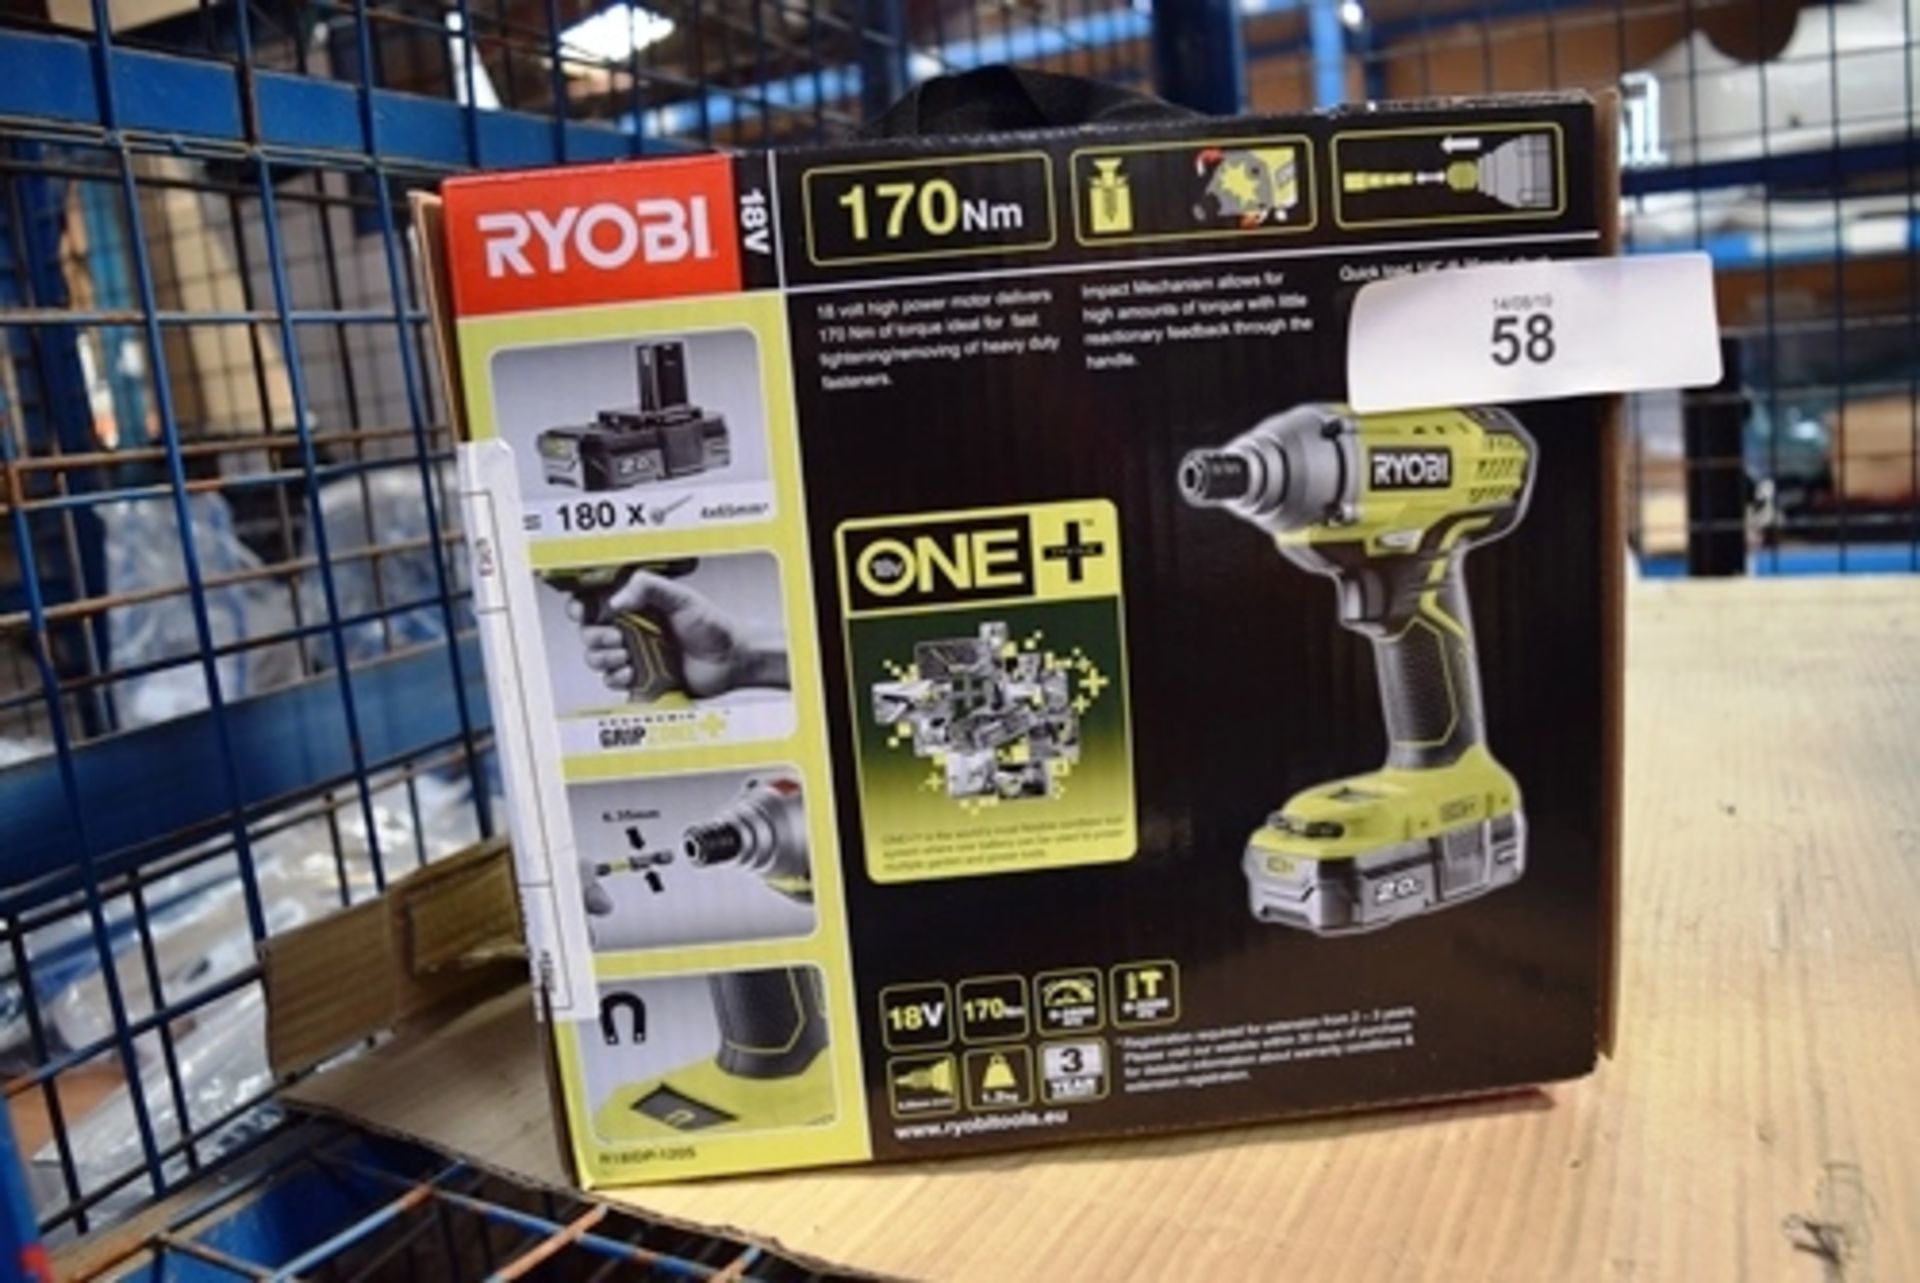 A Royobi 18V cordless drill, model R18IDP-120S - New in box (Cage4)